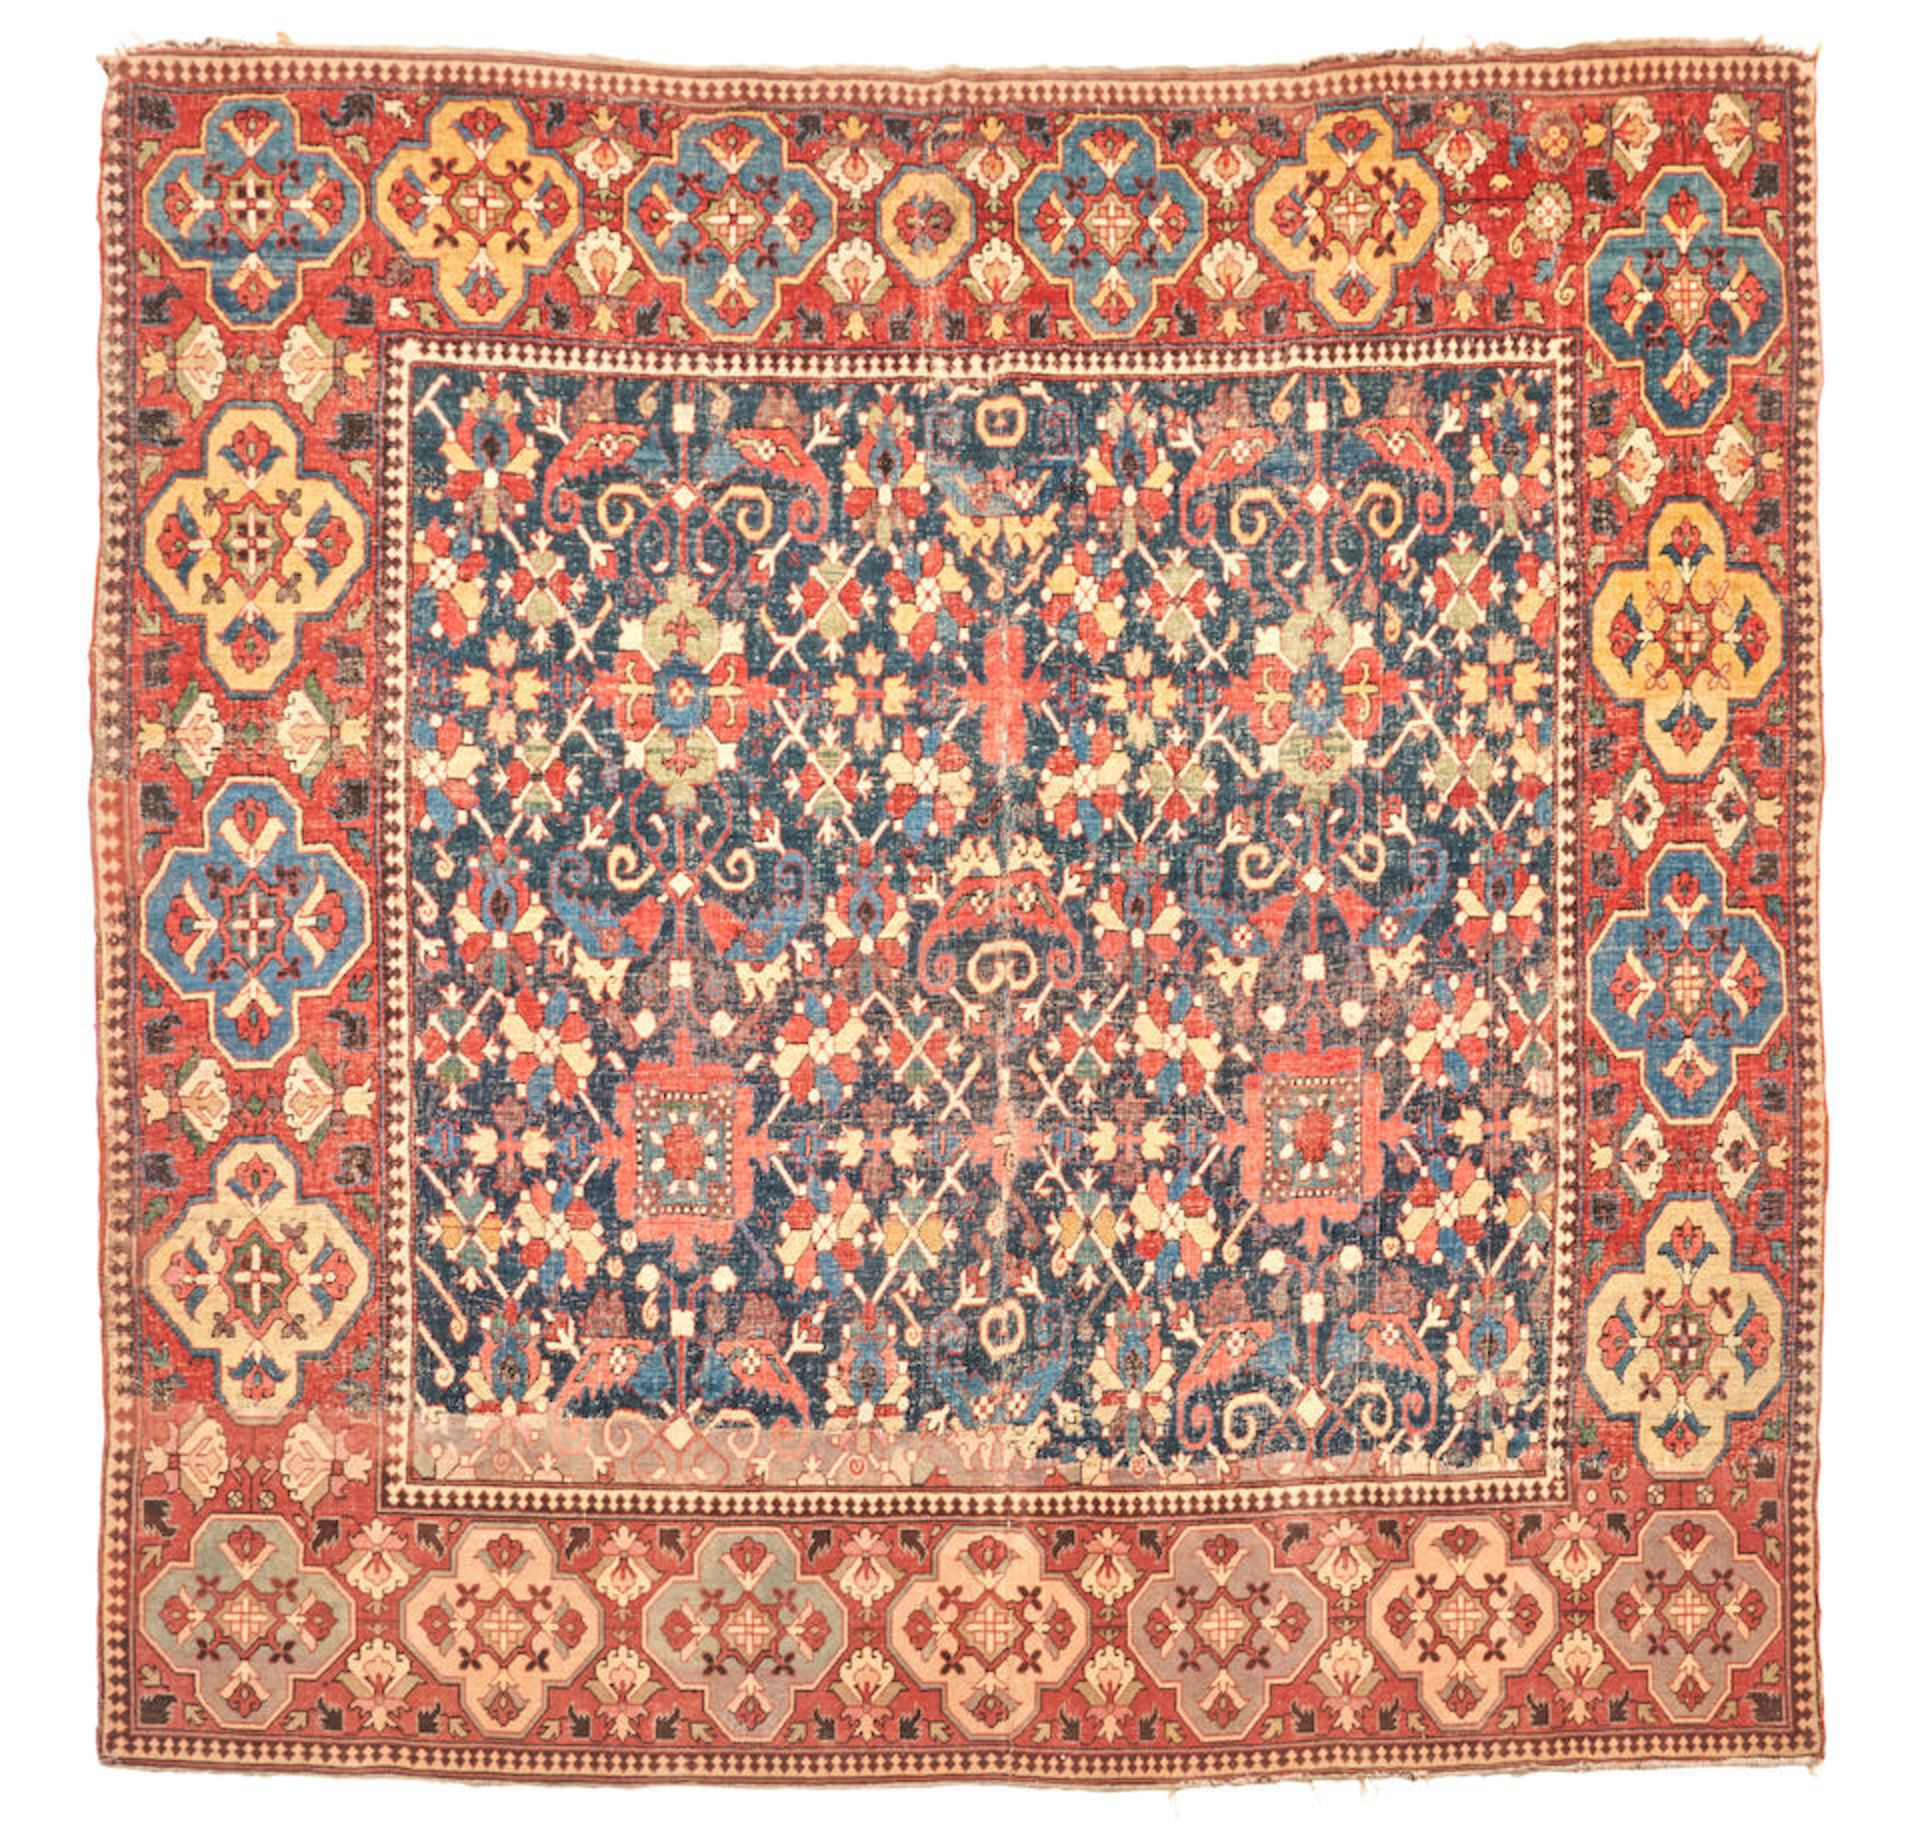 Early Caucasian Gallery Carpet Caucasus 7 ft. 6 in. x 7 ft. 8 in.